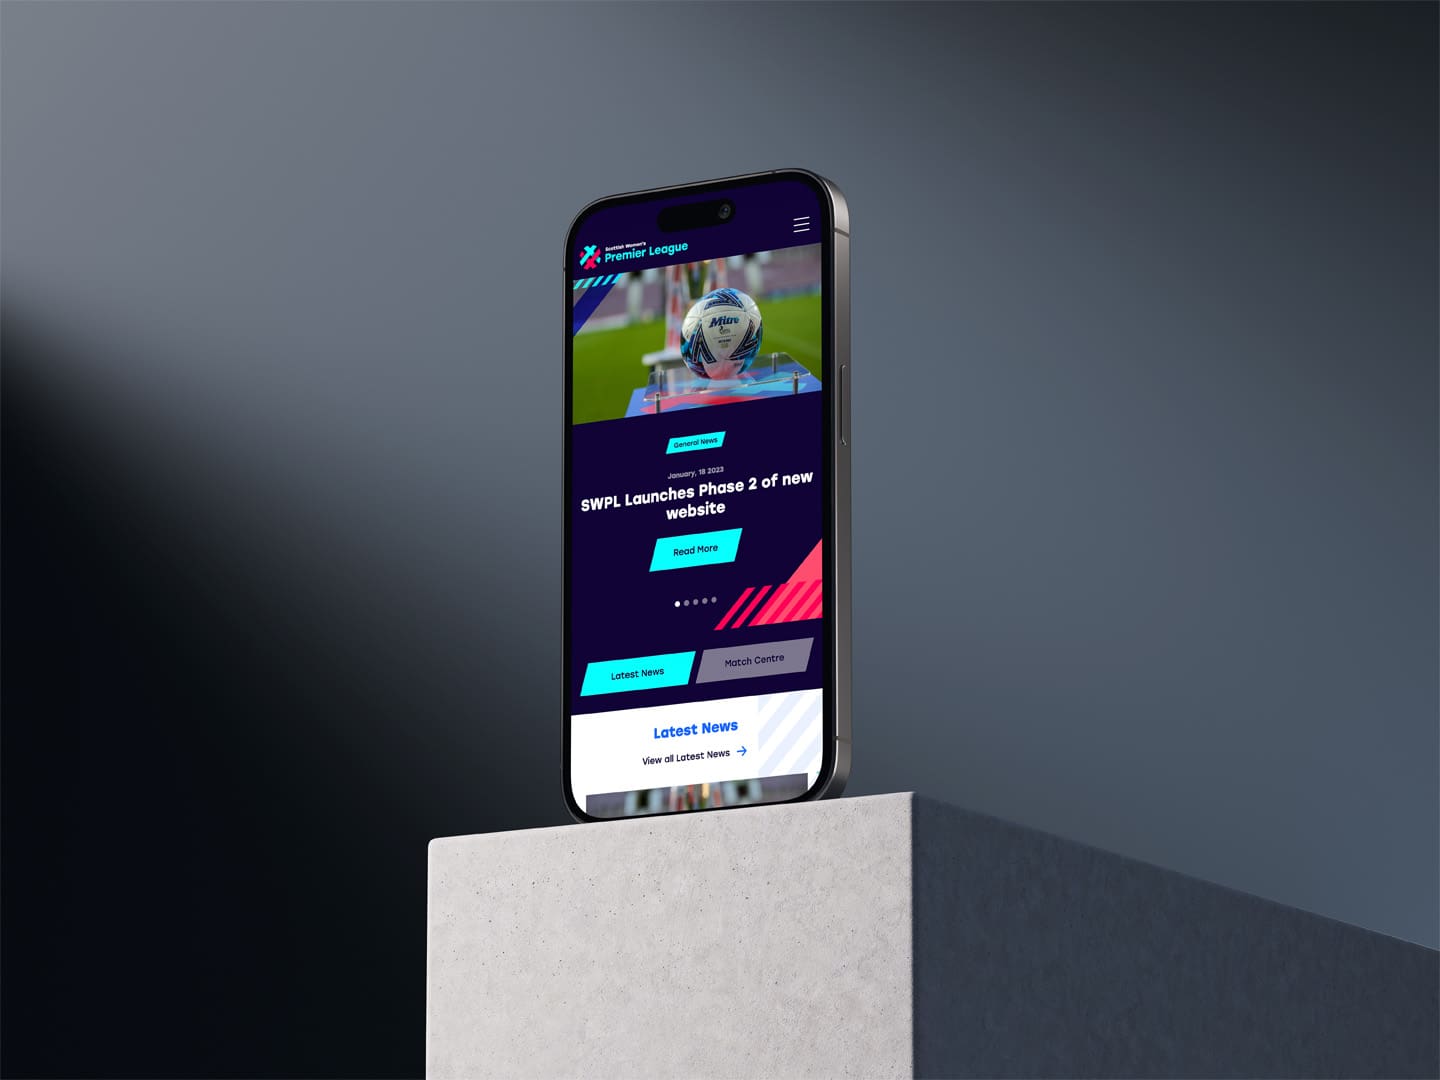 iPhone device illustrating the Scottish Women's Premier League (SWPL) website